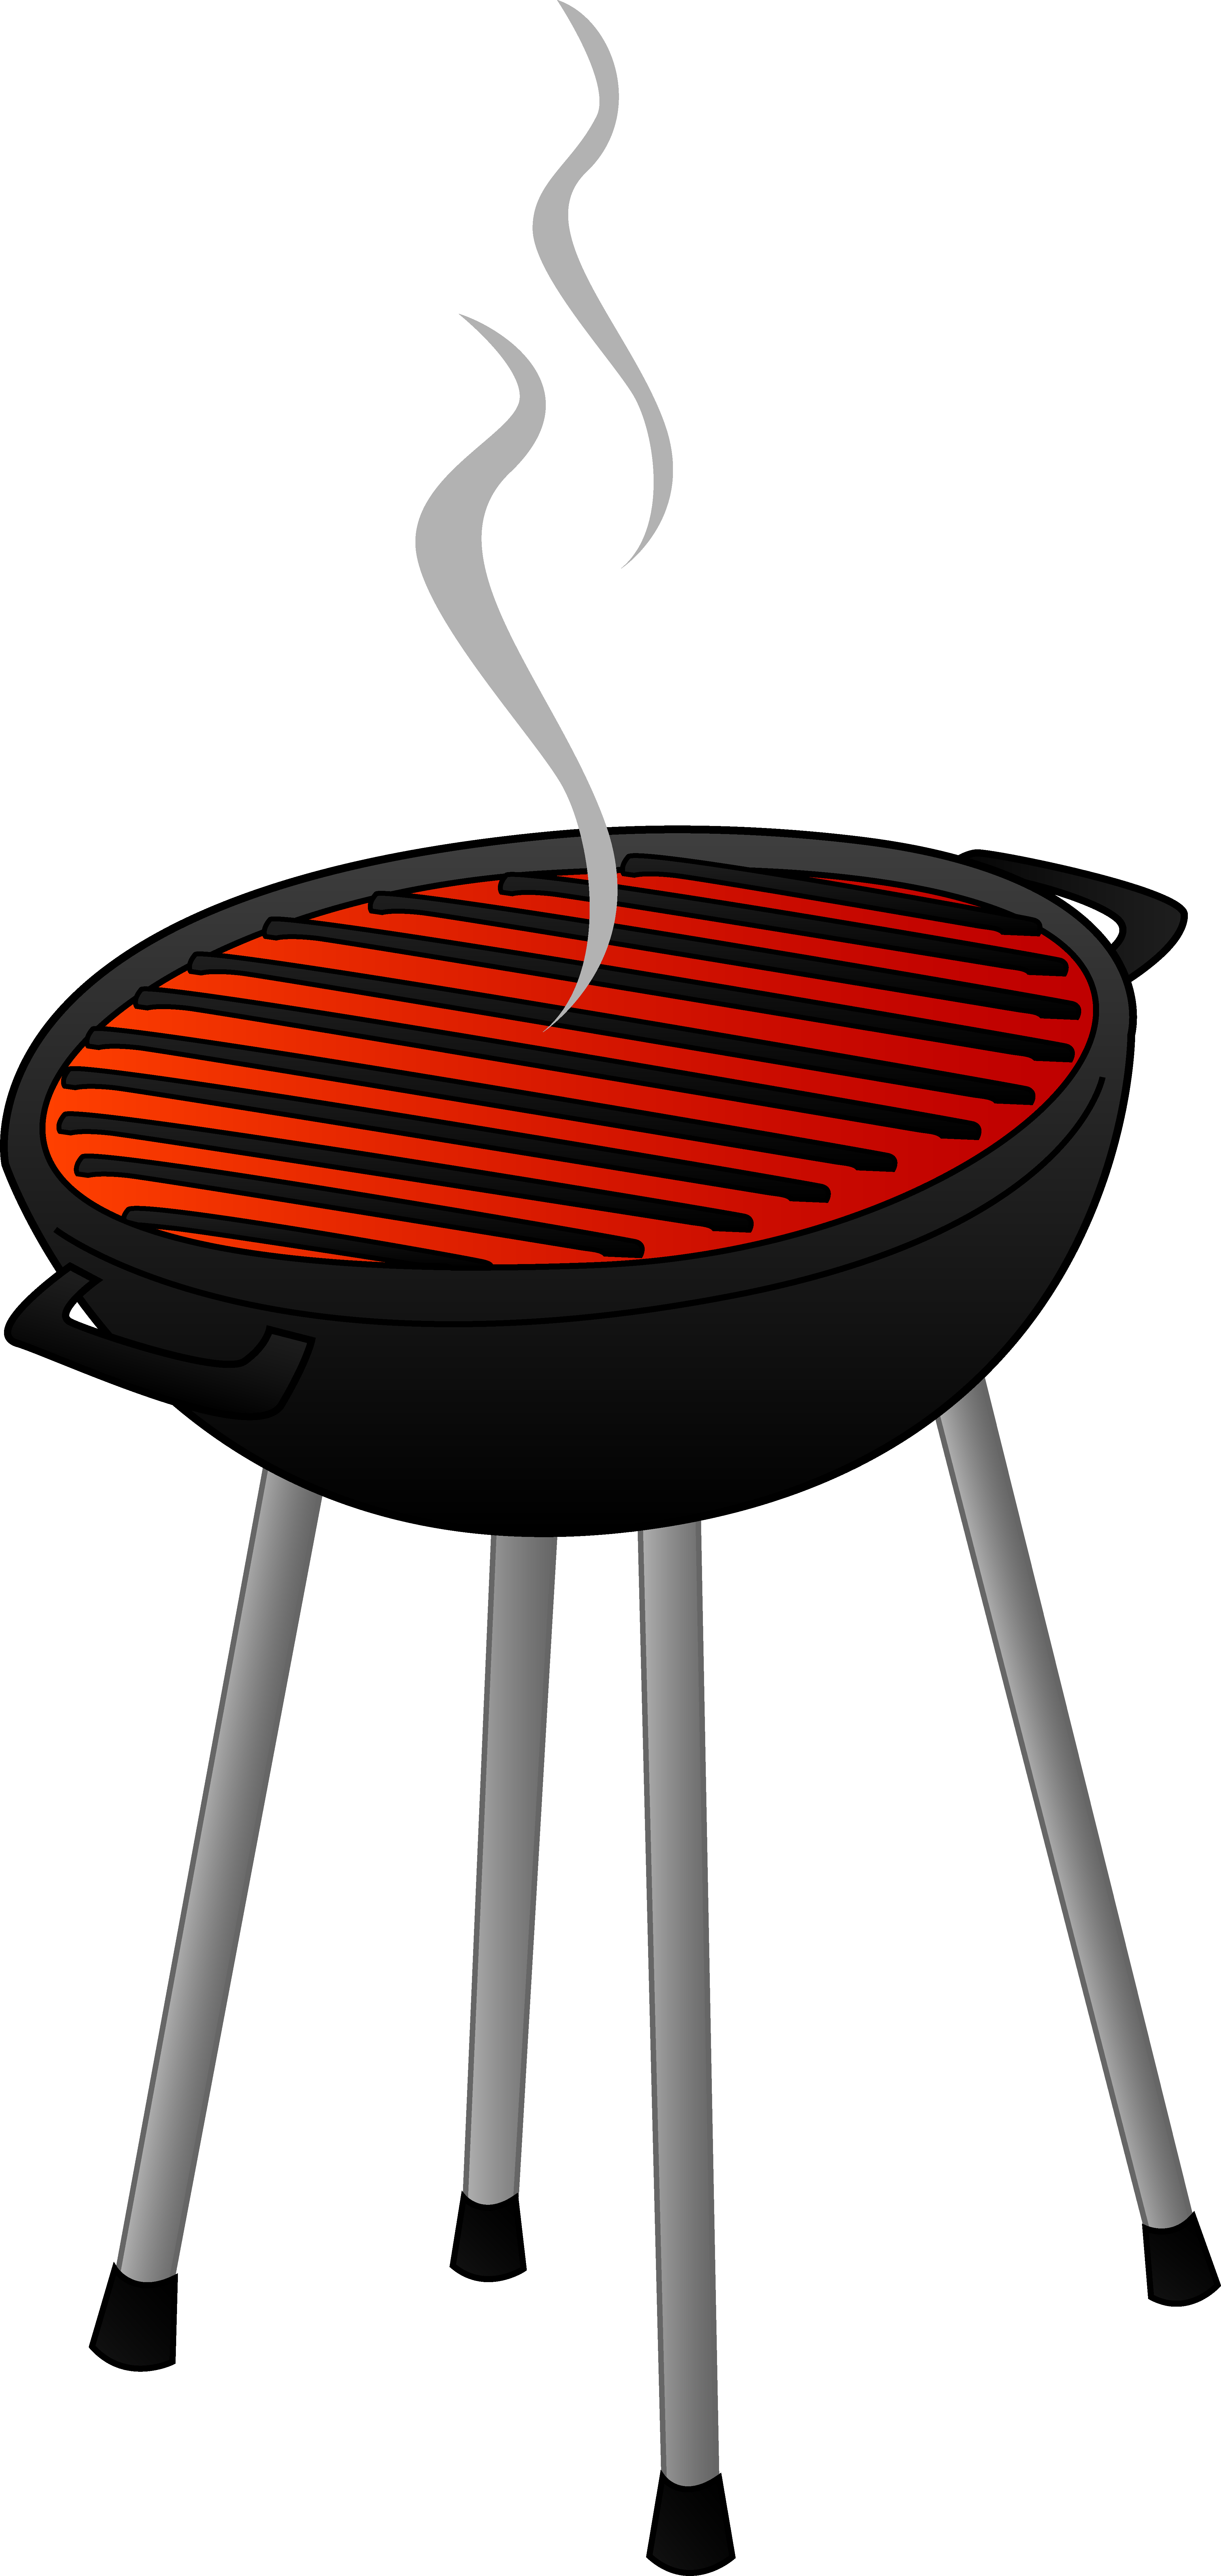 Barbecue grill clipart Clipground